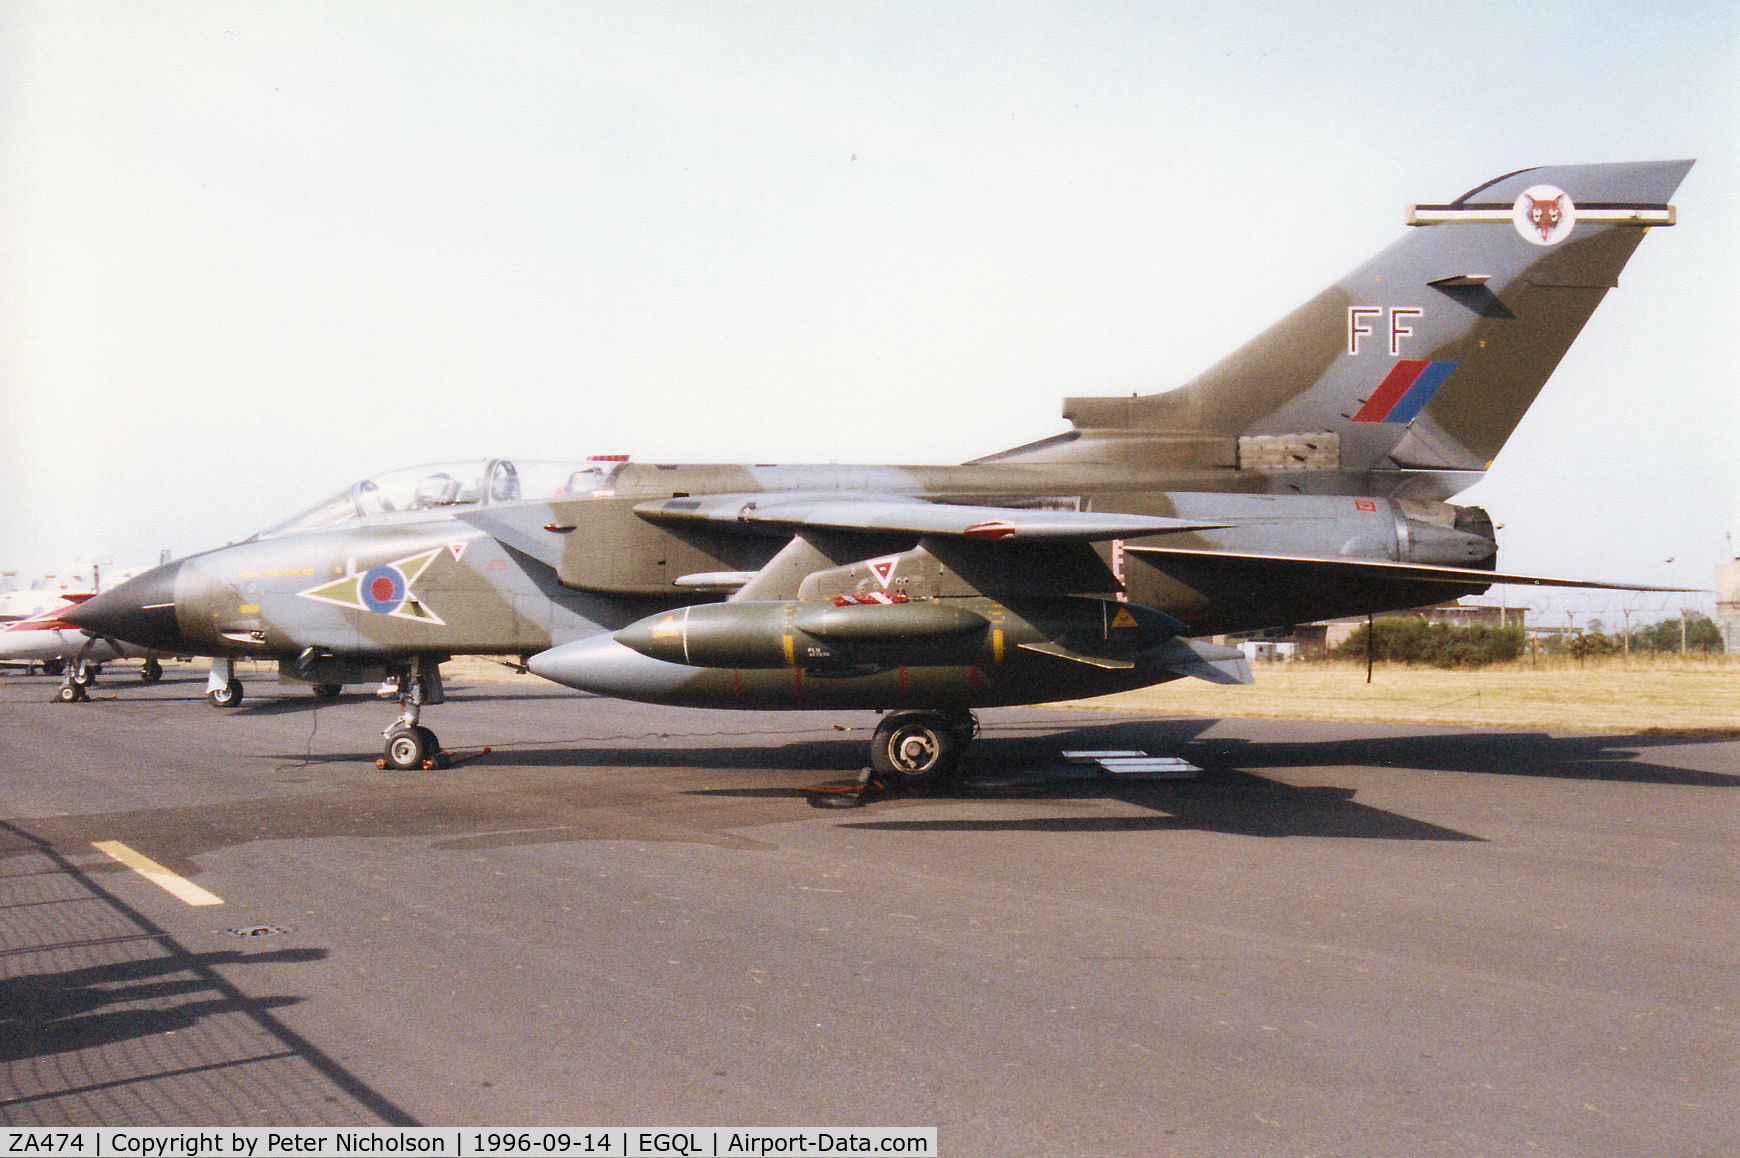 ZA474, 1983 Panavia Tornado GR.1B C/N 300/BS104/3140, Tornado GR.1B, callsign Wolf 1, of 12 Squadron at RAF Lossiemouth on display at the 1996 RAF Leuchars Airshow.